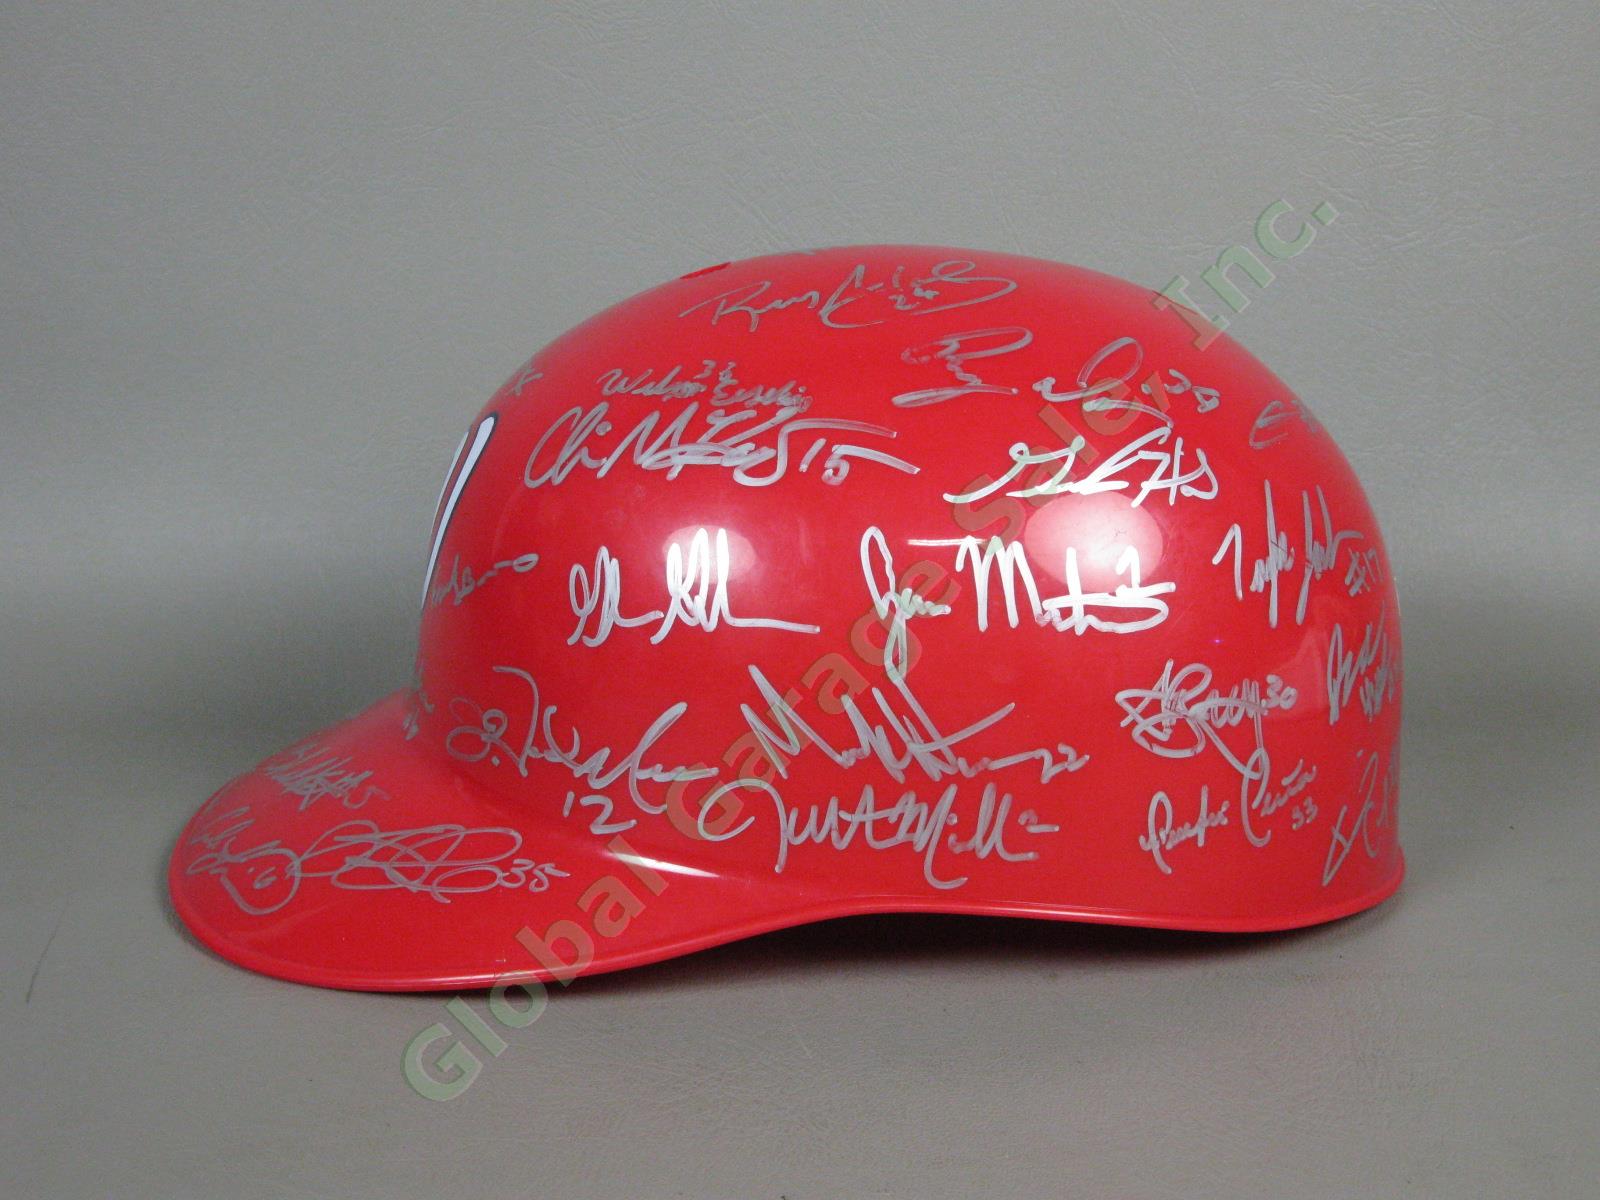 2010 Vermont Lake Monsters Team Signed Baseball Helmet NYPL Washington Nationals 3